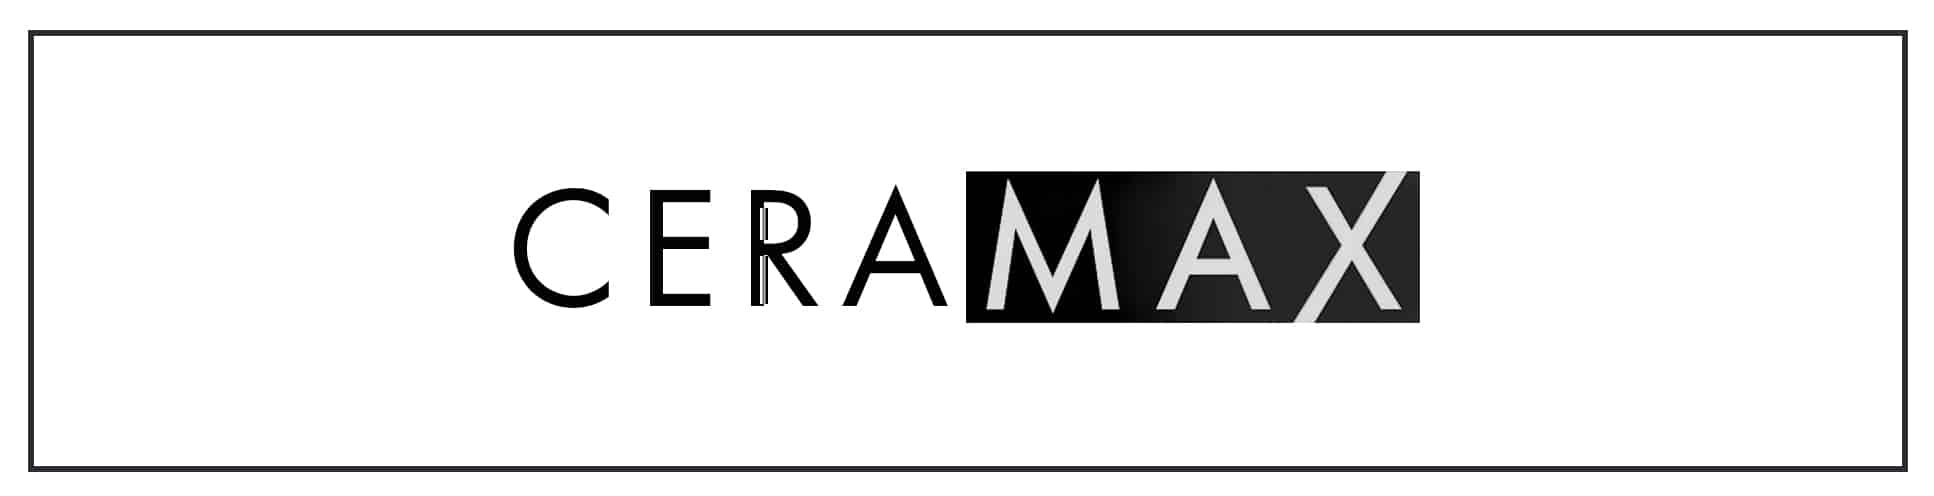 Ceramax logo on a white background.